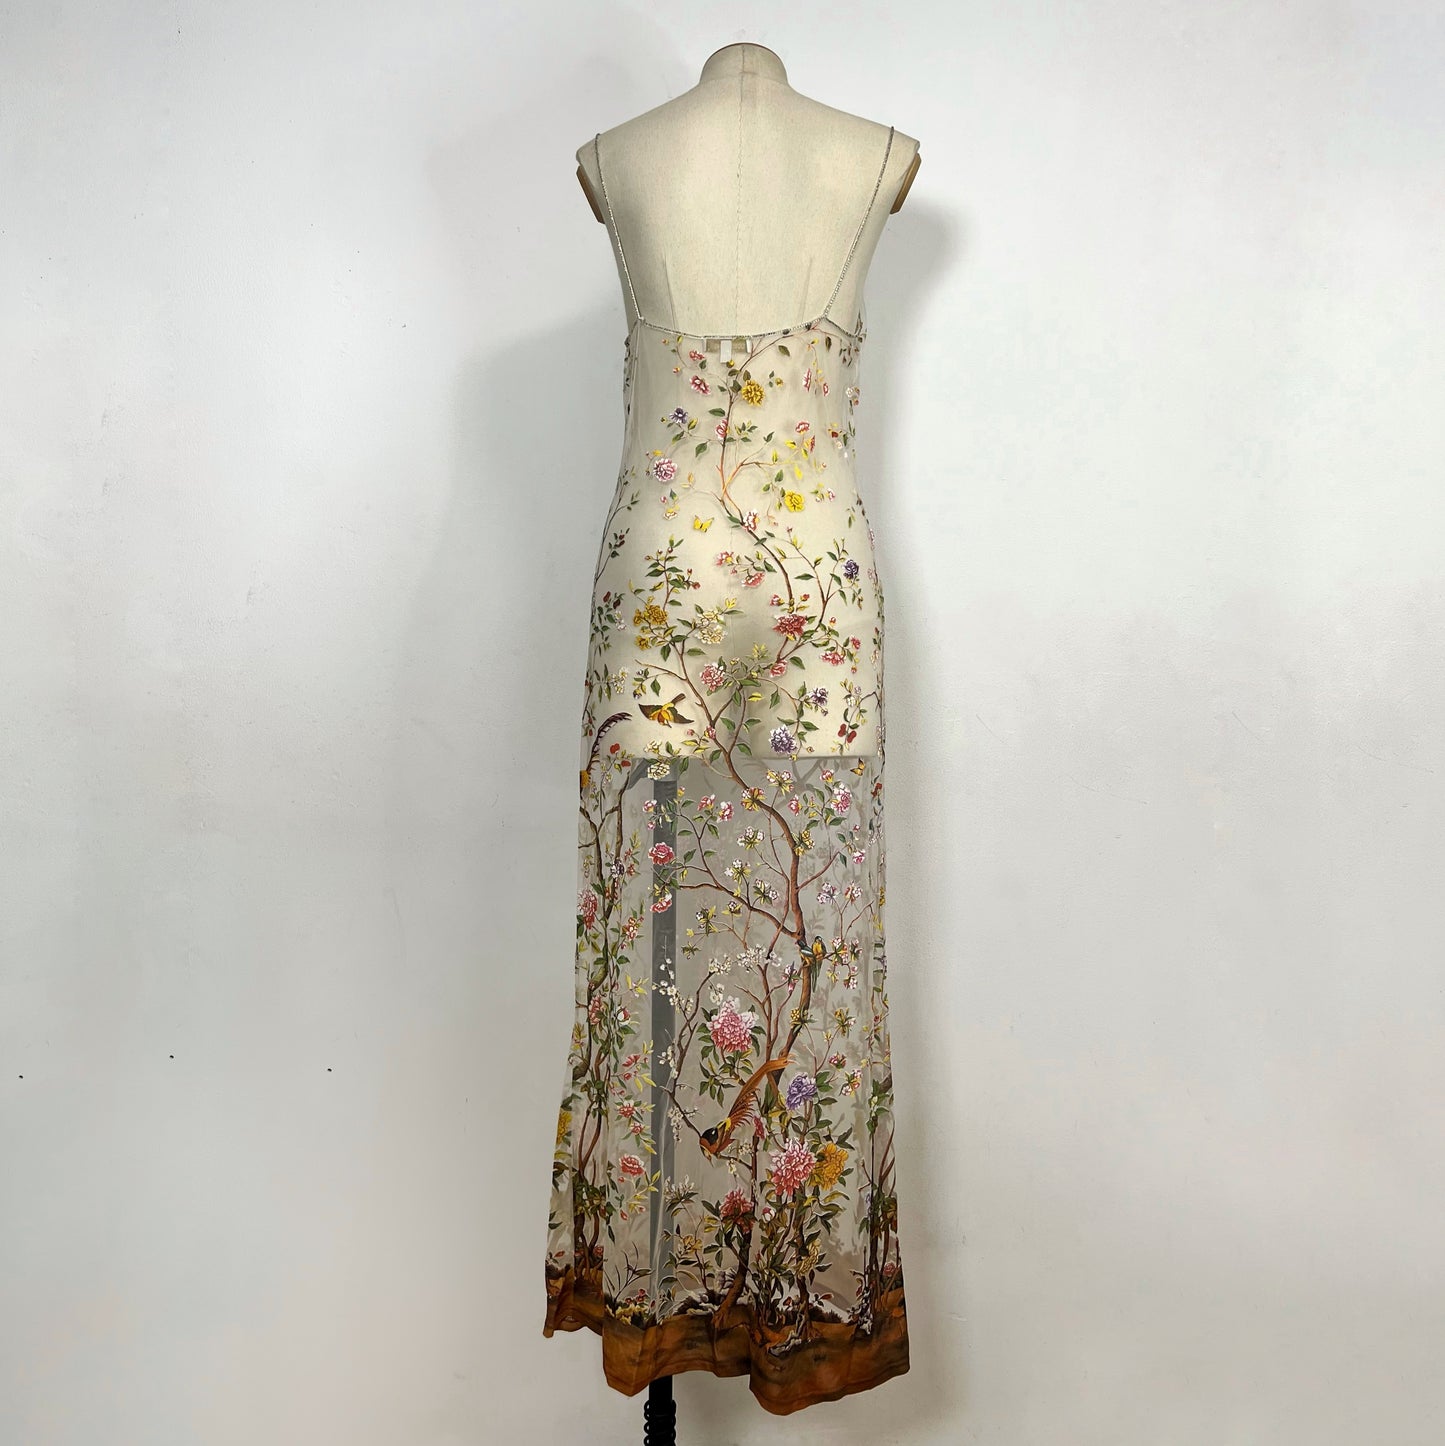 Roberto Cavalli 1998 sheer floral dress